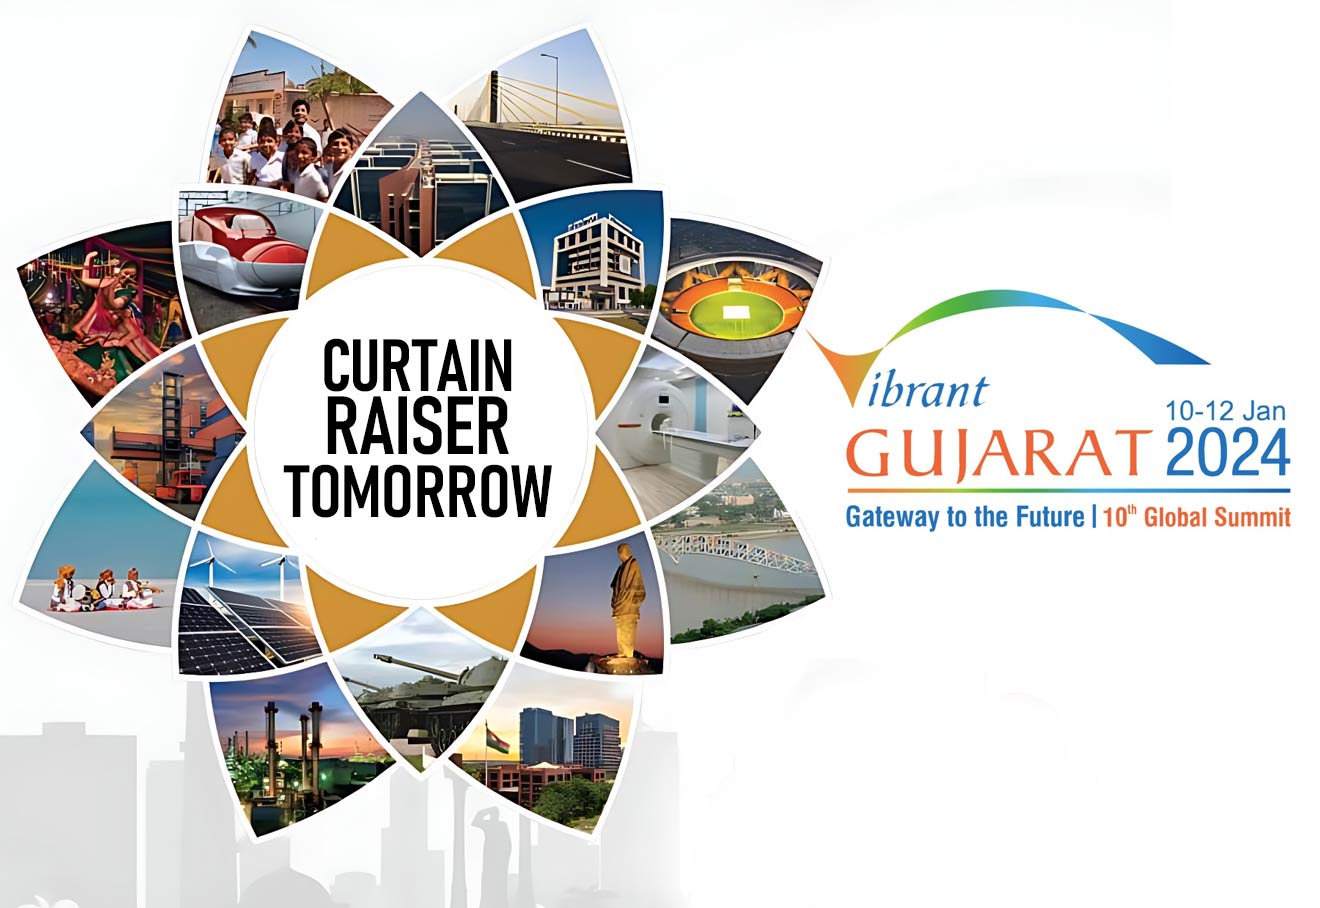 Curtain Raiser Of Vibrant Gujarat Global Summit To Begin In New Delhi From Oct 6